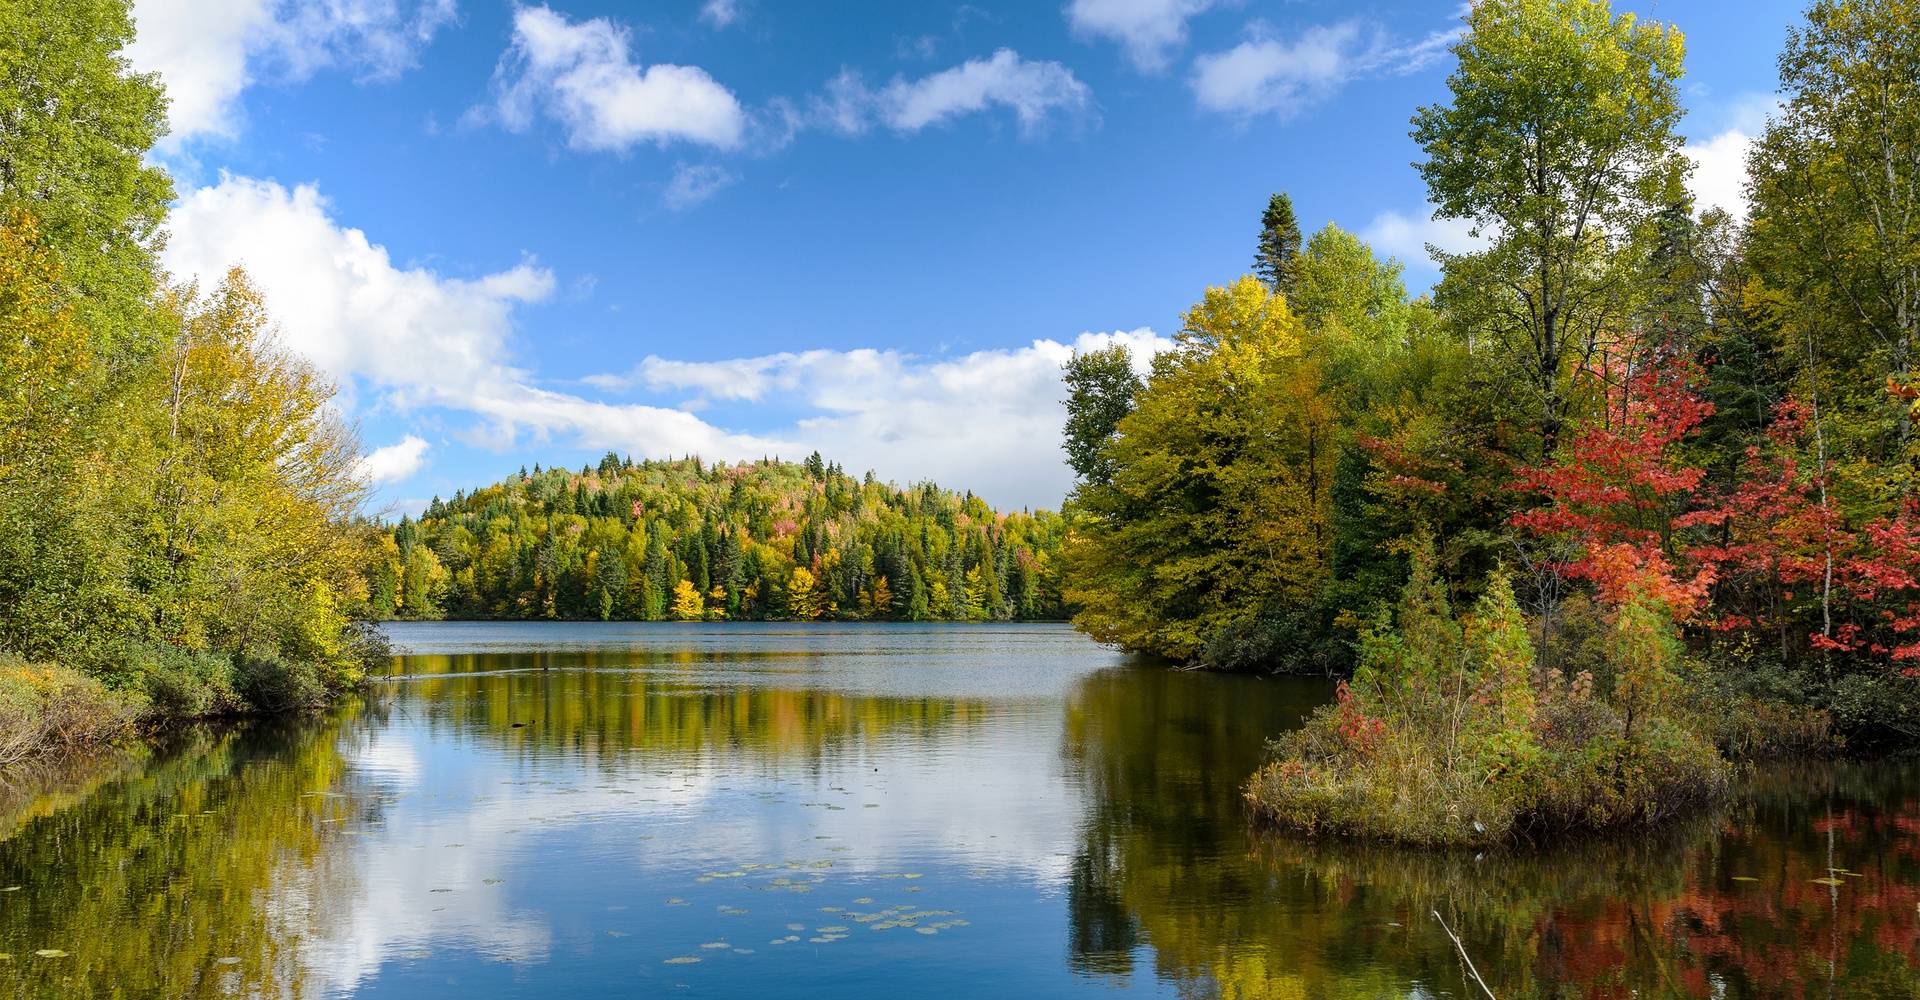 Nybegynder Kenya klint Quebec Fall Foliage Tour | French Canada Nature Travel